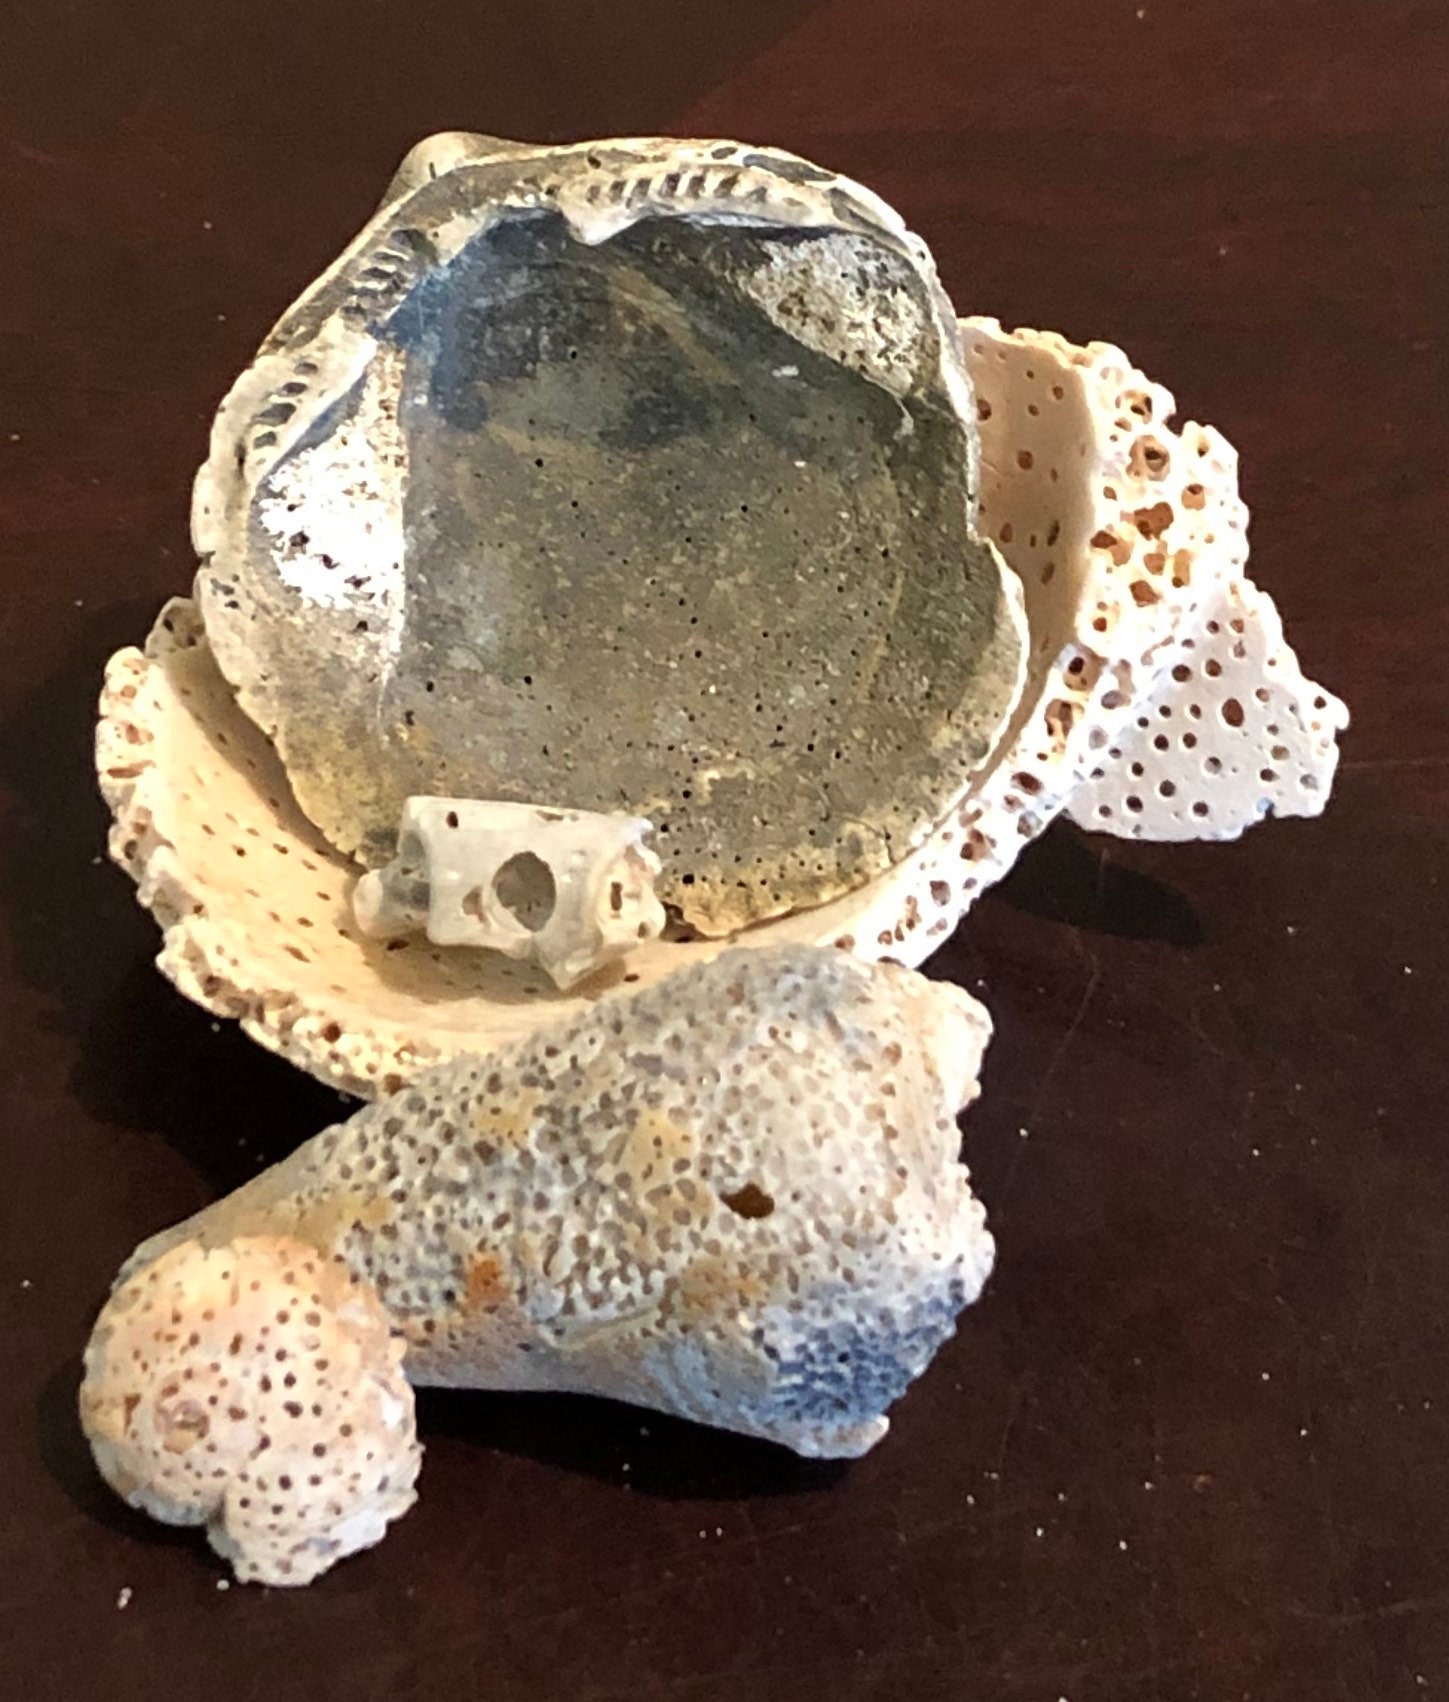 Fossilized Natural Shells Seashells for Art Beach Decor Aged